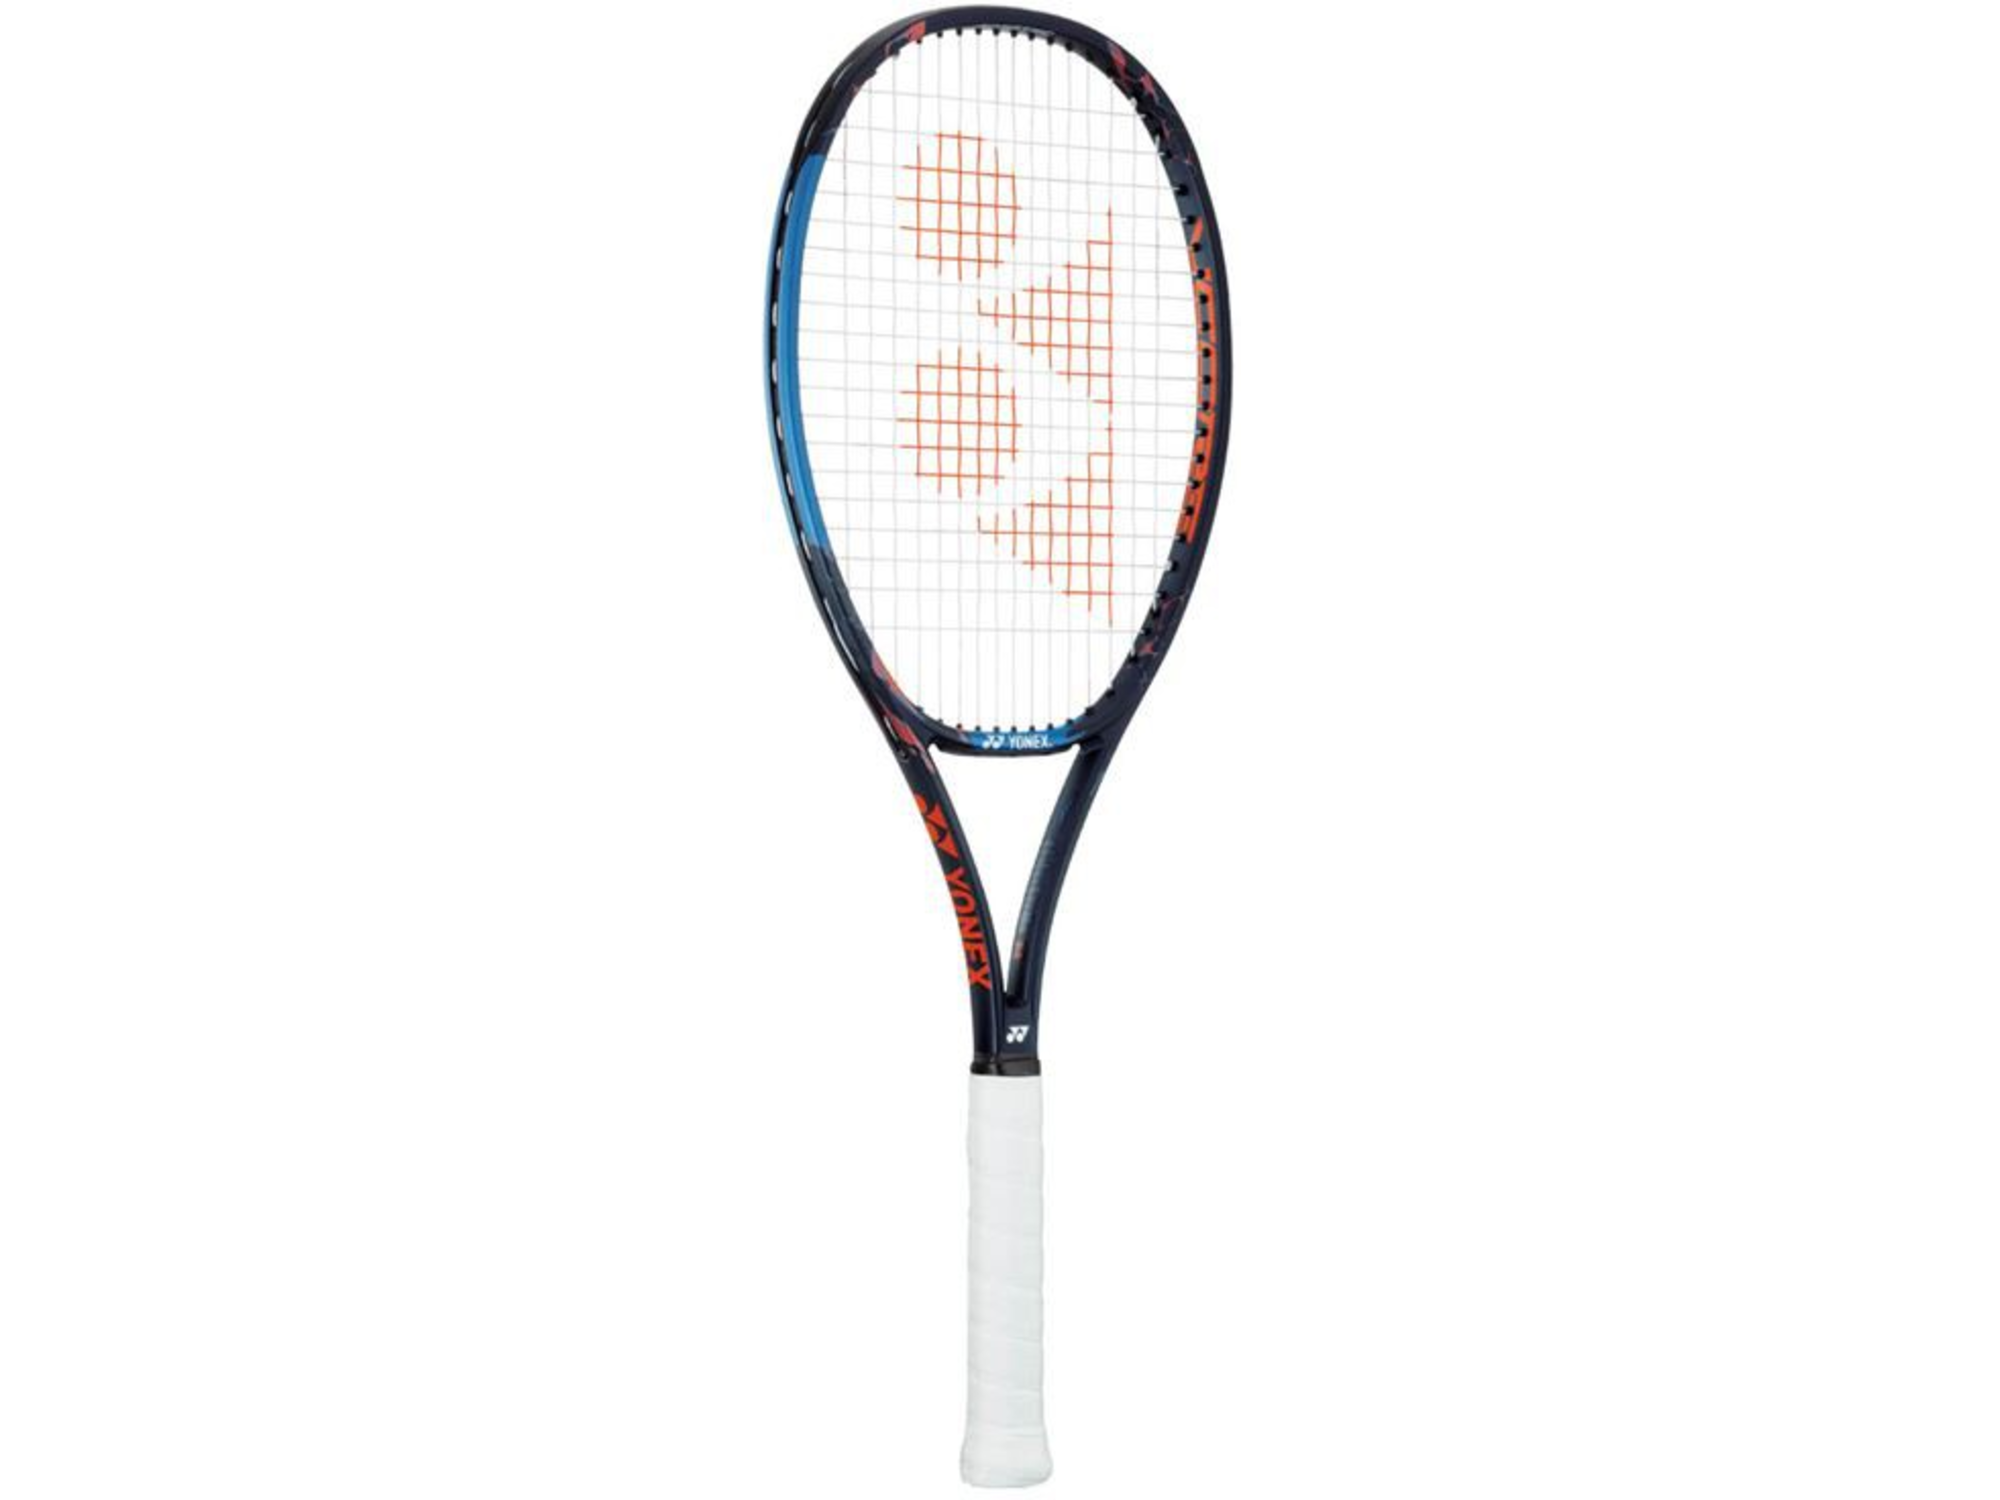 YONEX tenis lopar VCORE PRO 100,navy orange,300g,G3